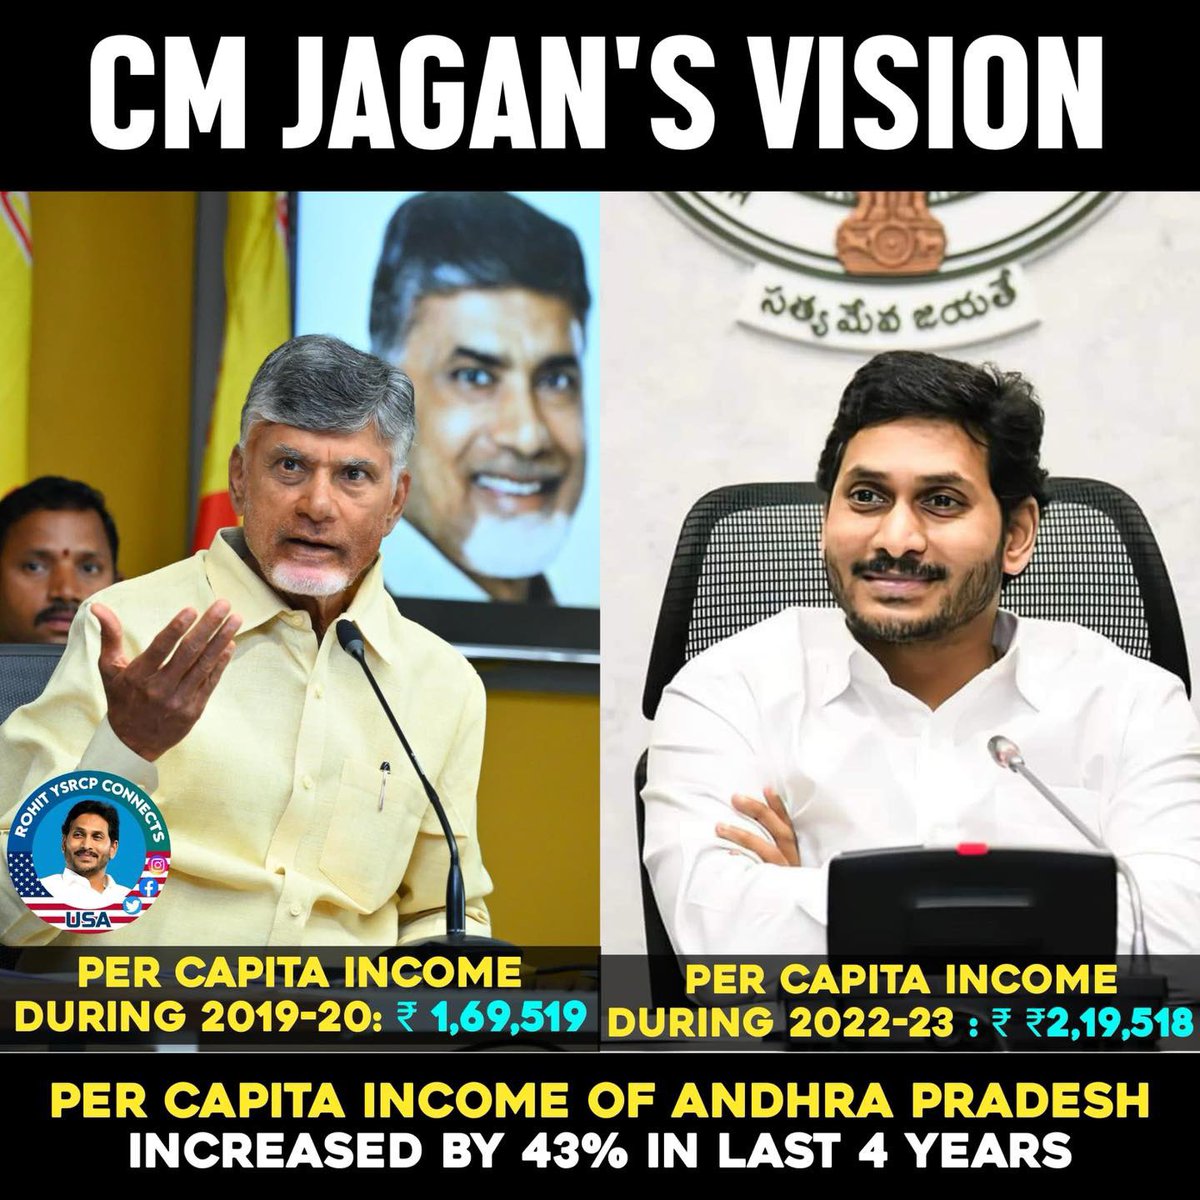 Andhra Pradesh’s Growth Per Capita Reflects Development Momentum ! 

#YSJaganDevelopsAP #nadunedu
#HiddenFactsbyYellowMedia
#AndhraPradesh #CMYSJagan 
#YSJaganMarkGovernance 
#VoteForFan 
#YSJaganAgainIn2024